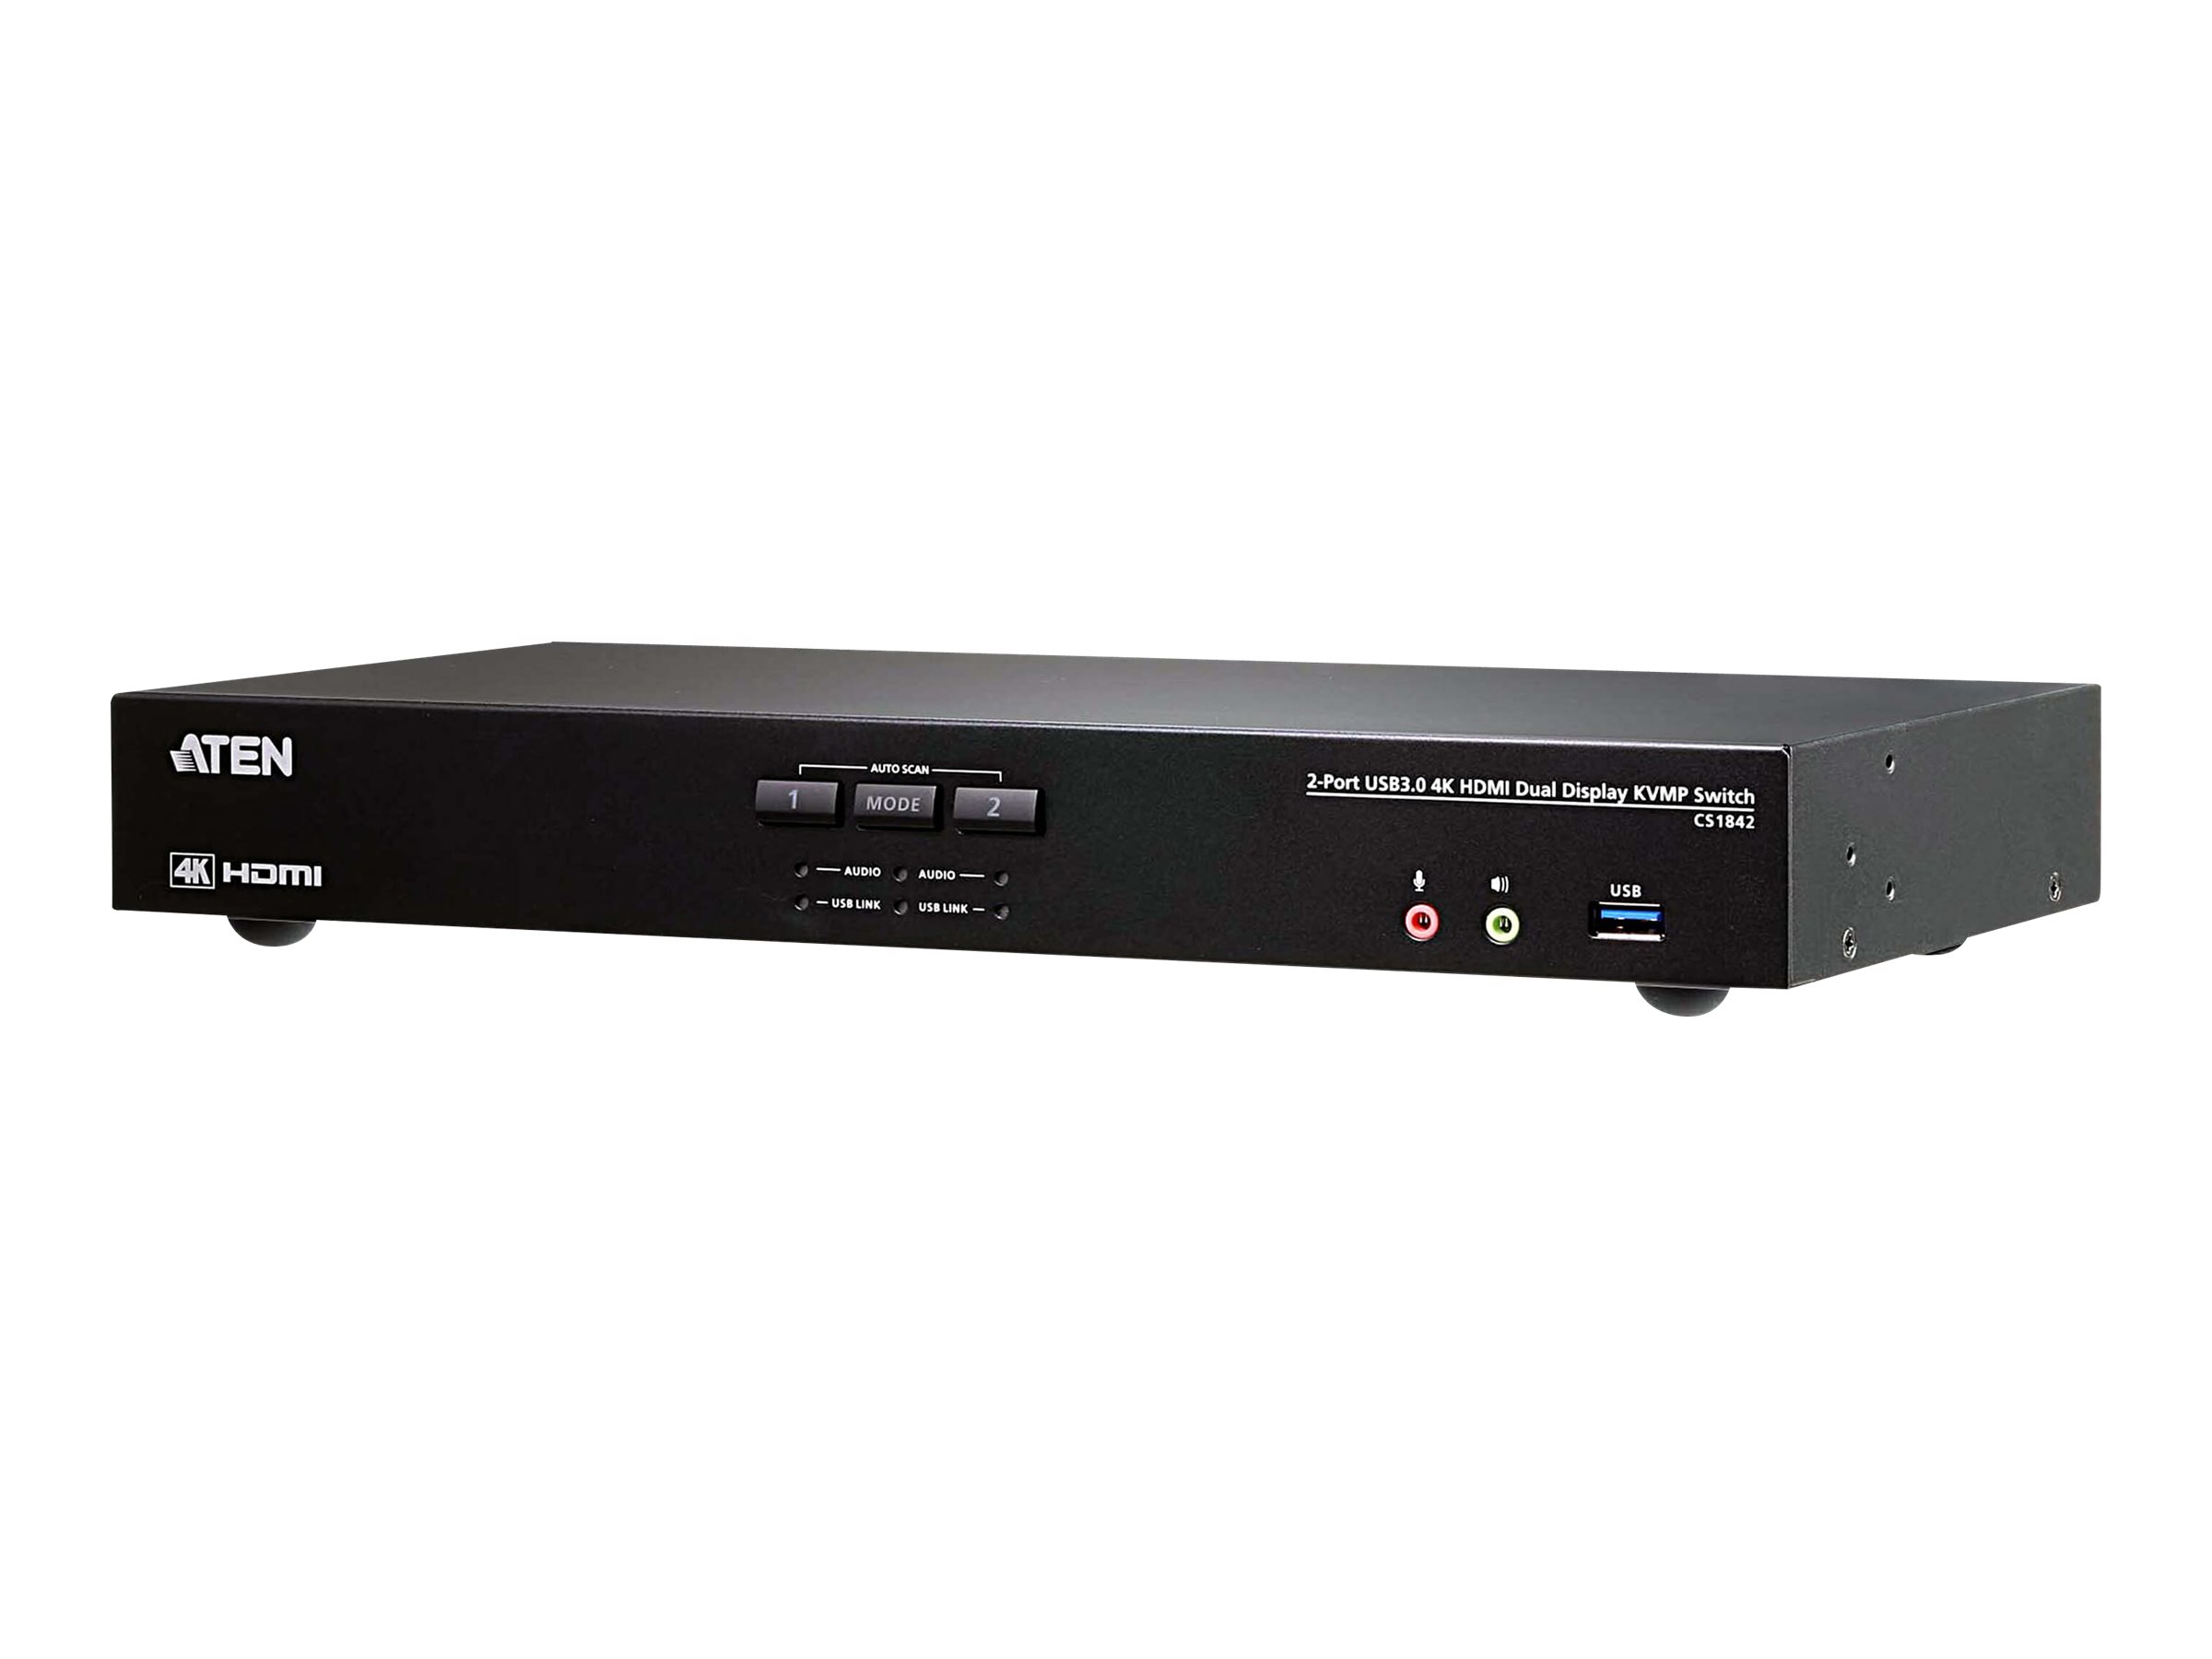 ATEN CS1842 2-Port USB 3.0 4K HDMI Dual Display KVMP Switch - KVM-/Audio-/USB-Switch - 2 x KVM/Audio/USB - 1 lokaler Benutzer - 